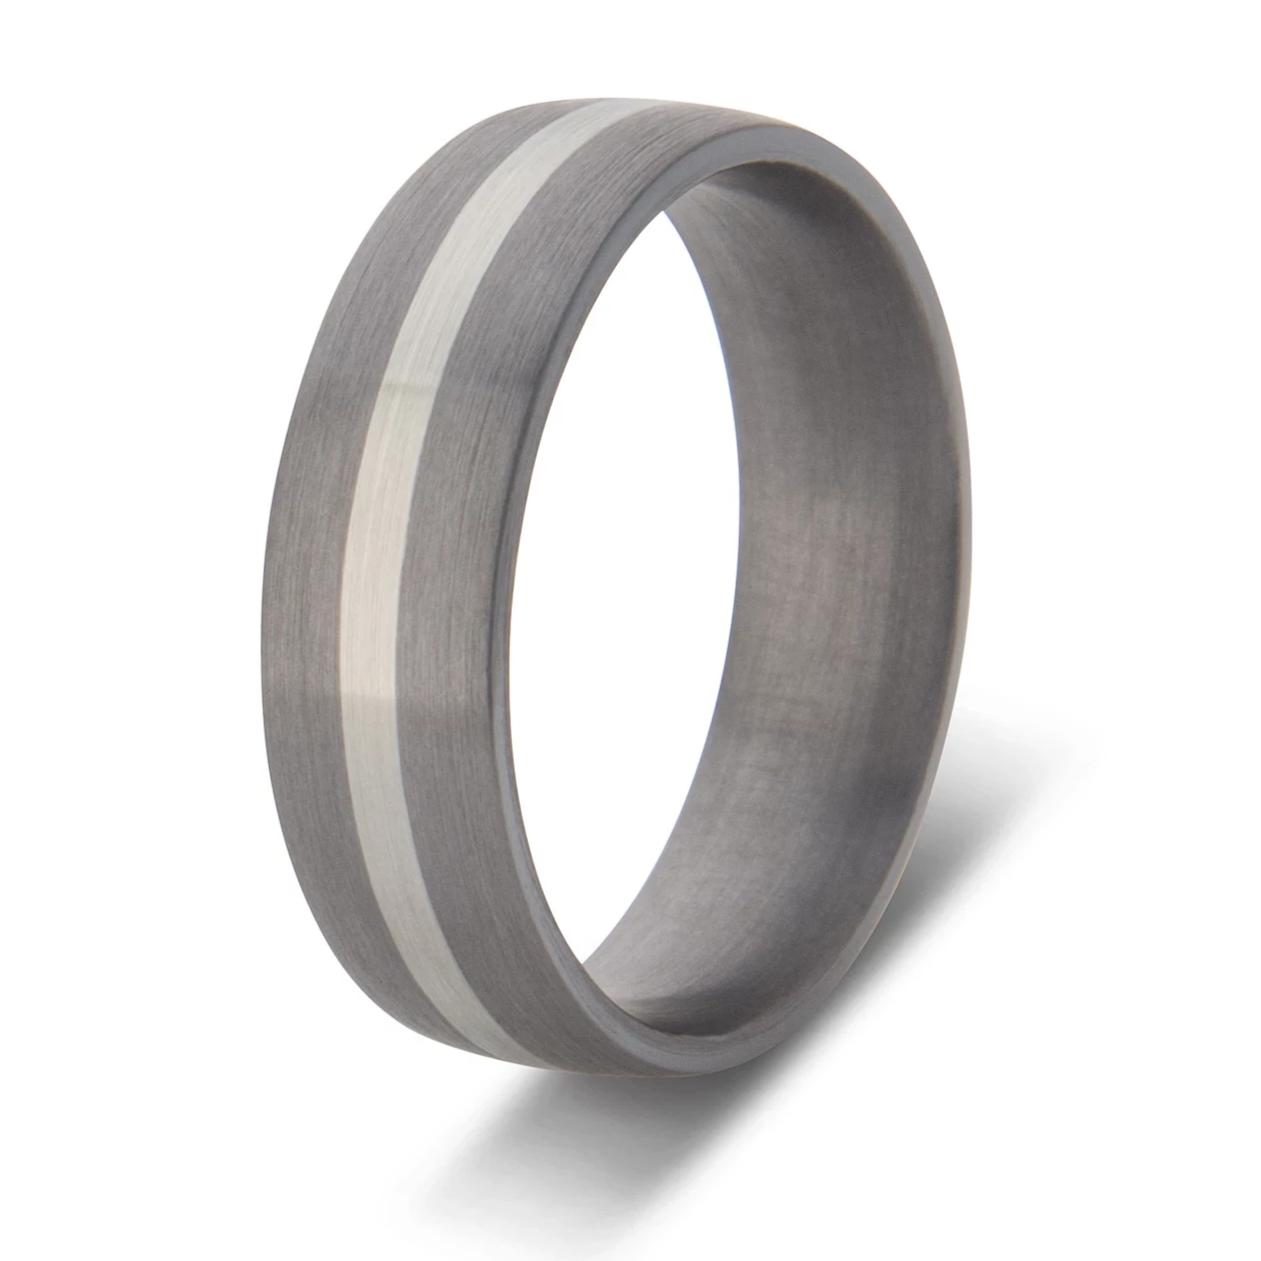 Tantalum and Platinum 600 Inlay Wedding Ring